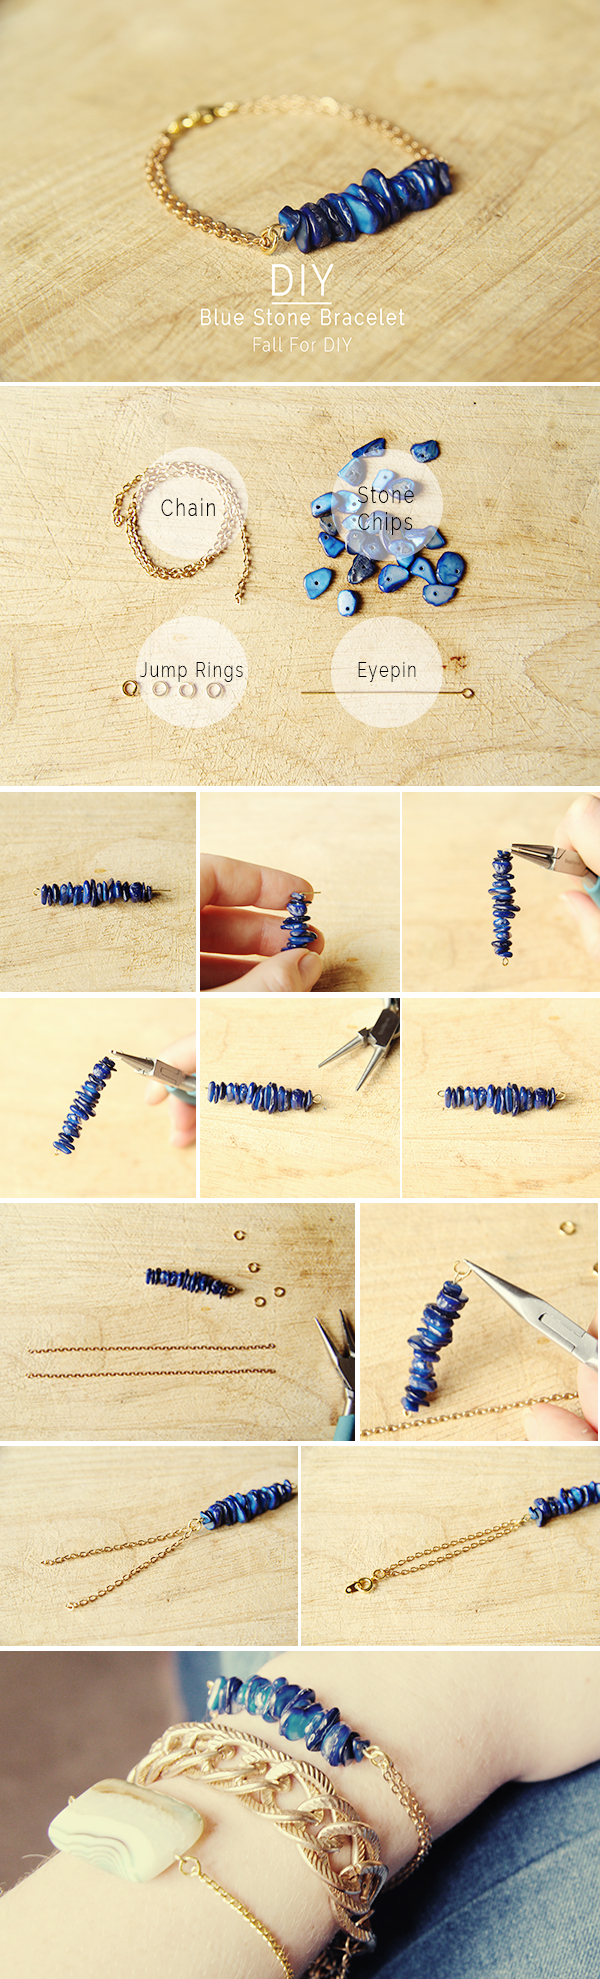 DIY-blue-stone-bracelet